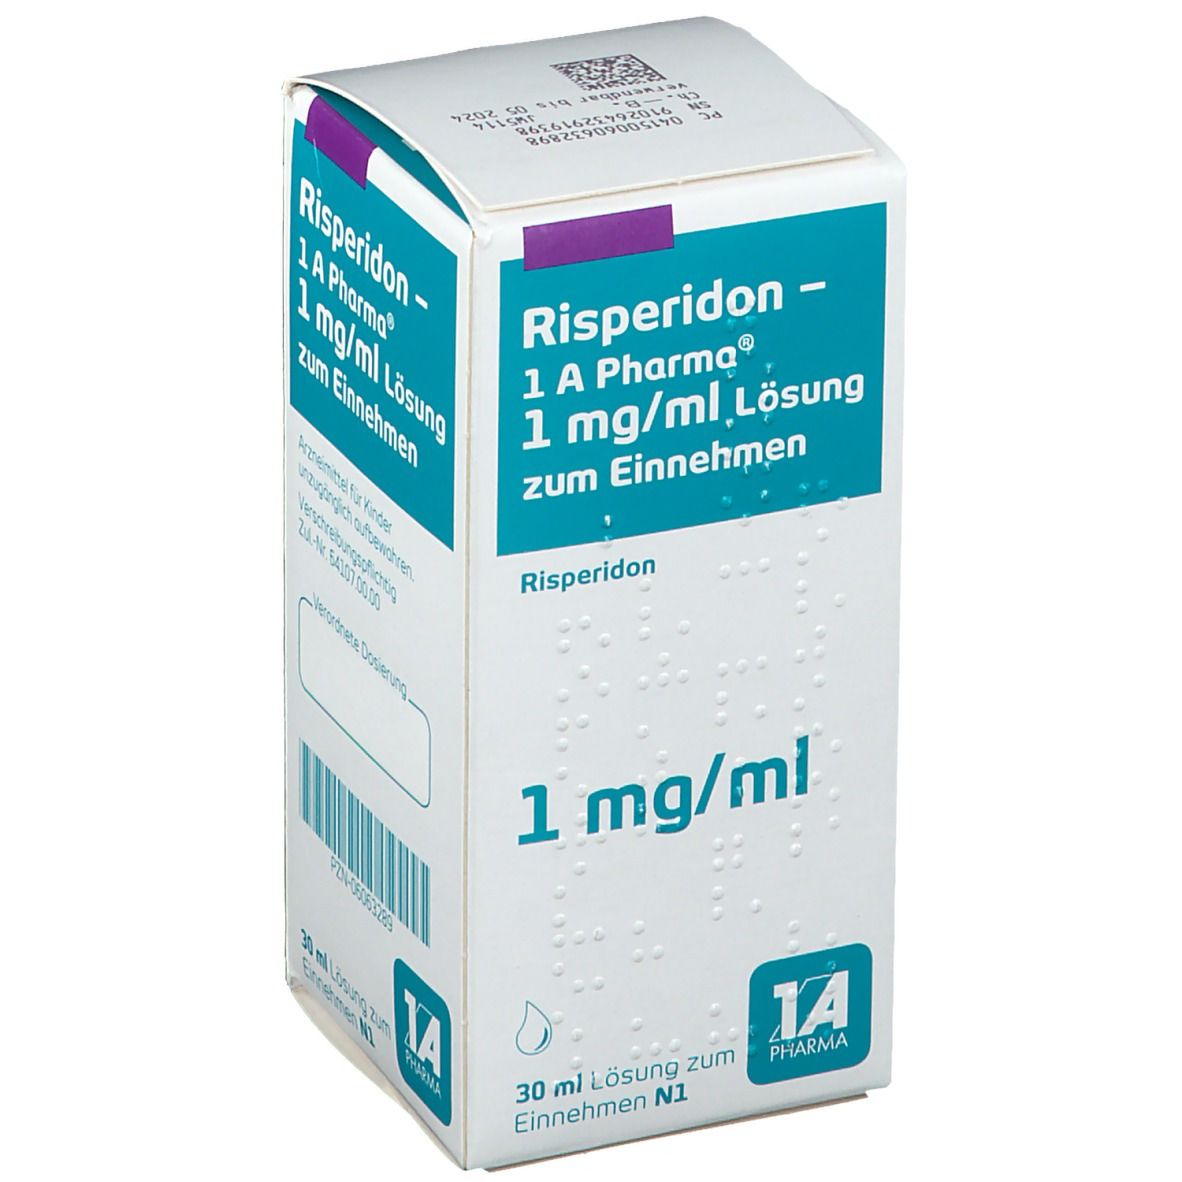 Risperidon - 1 A Pharma® 1 mg/ml Lösung